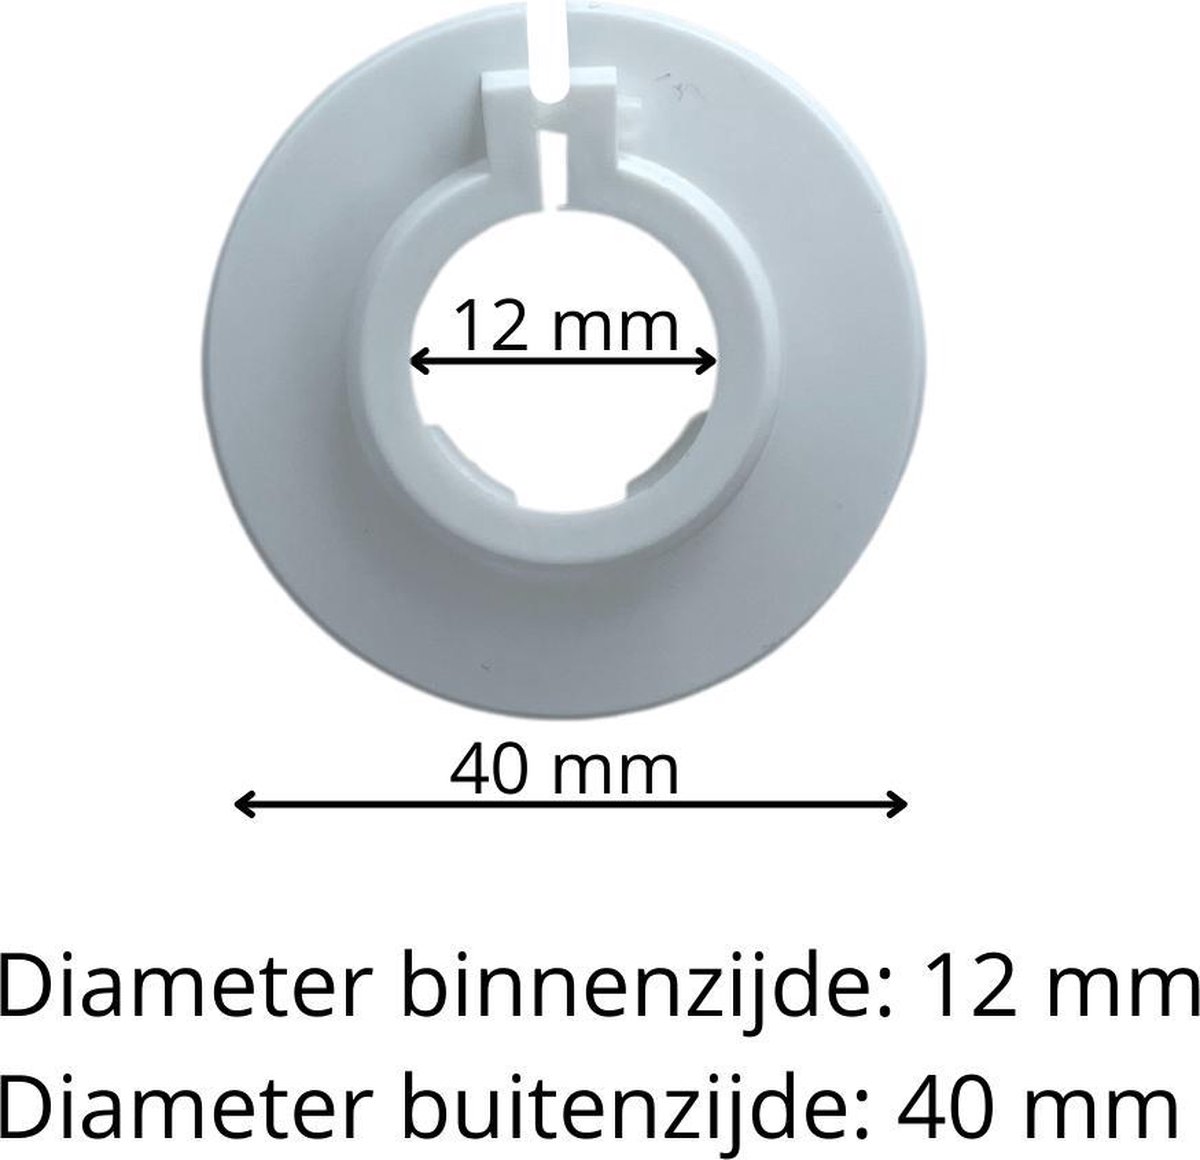 3BMT Klemrozet - buisrozet ø 12 mm - Design